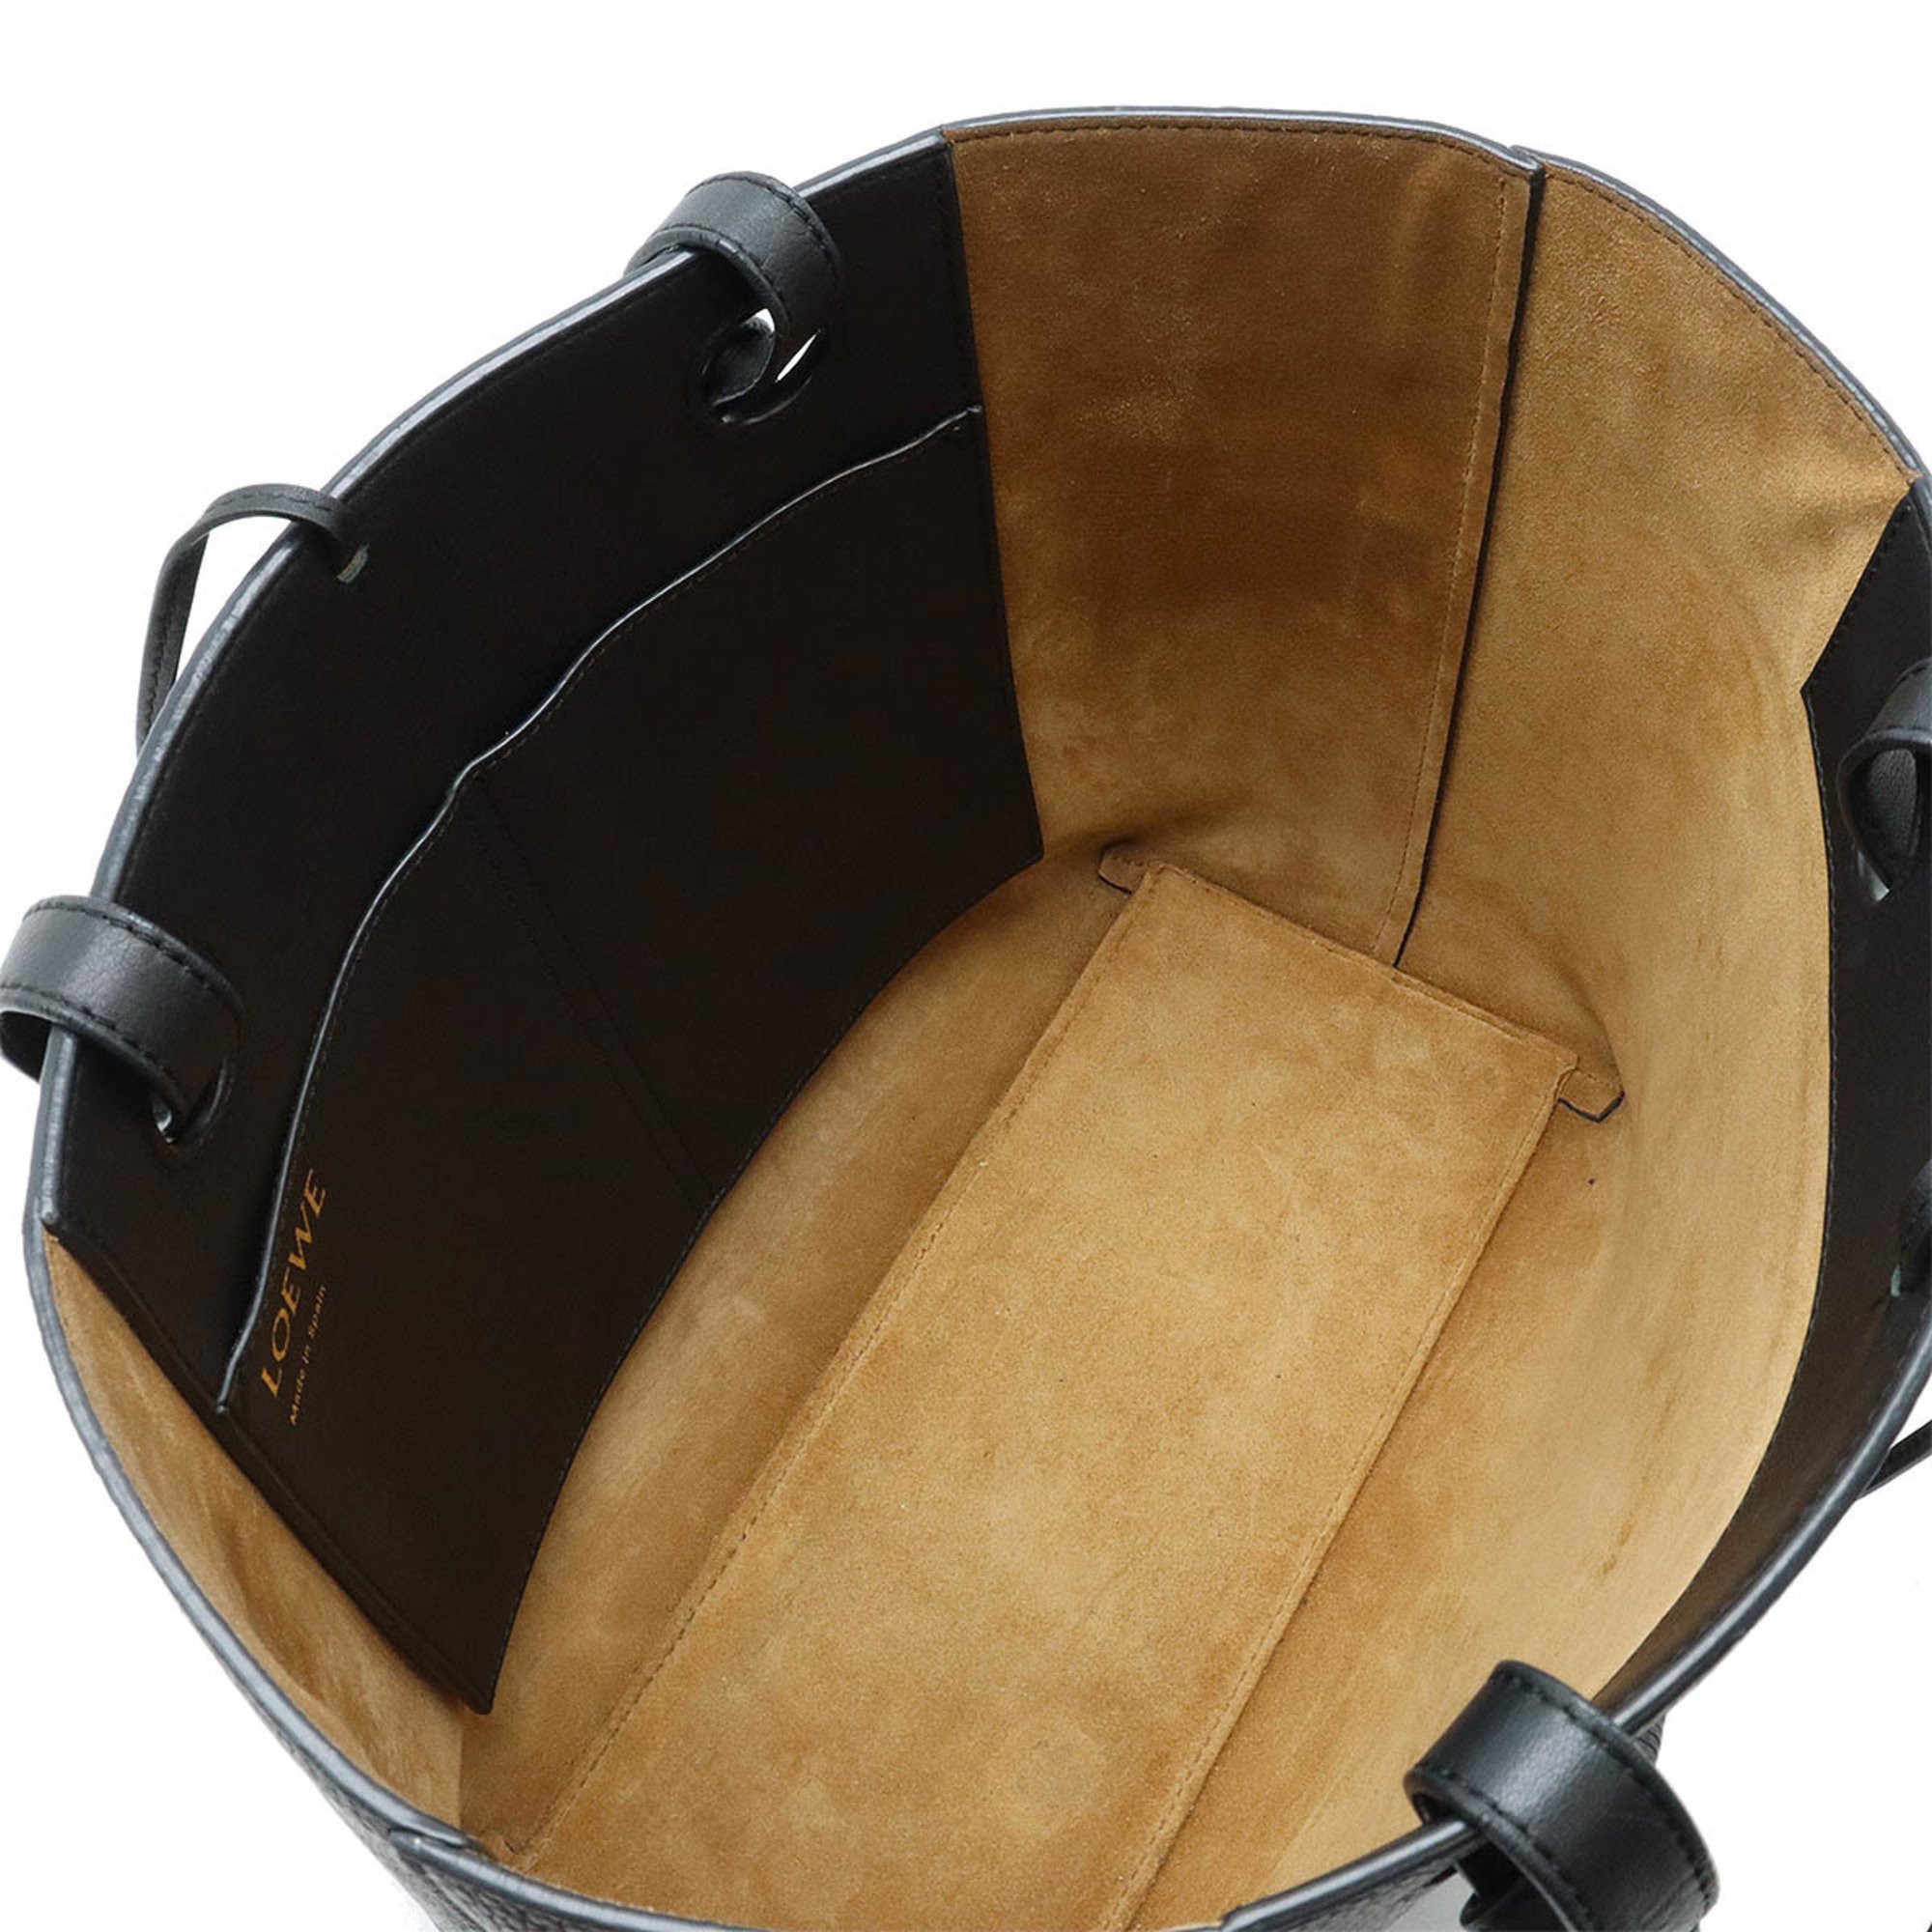 LOEWE Anagram Handbag Tote Bag Calf Leather Black A717S72X03